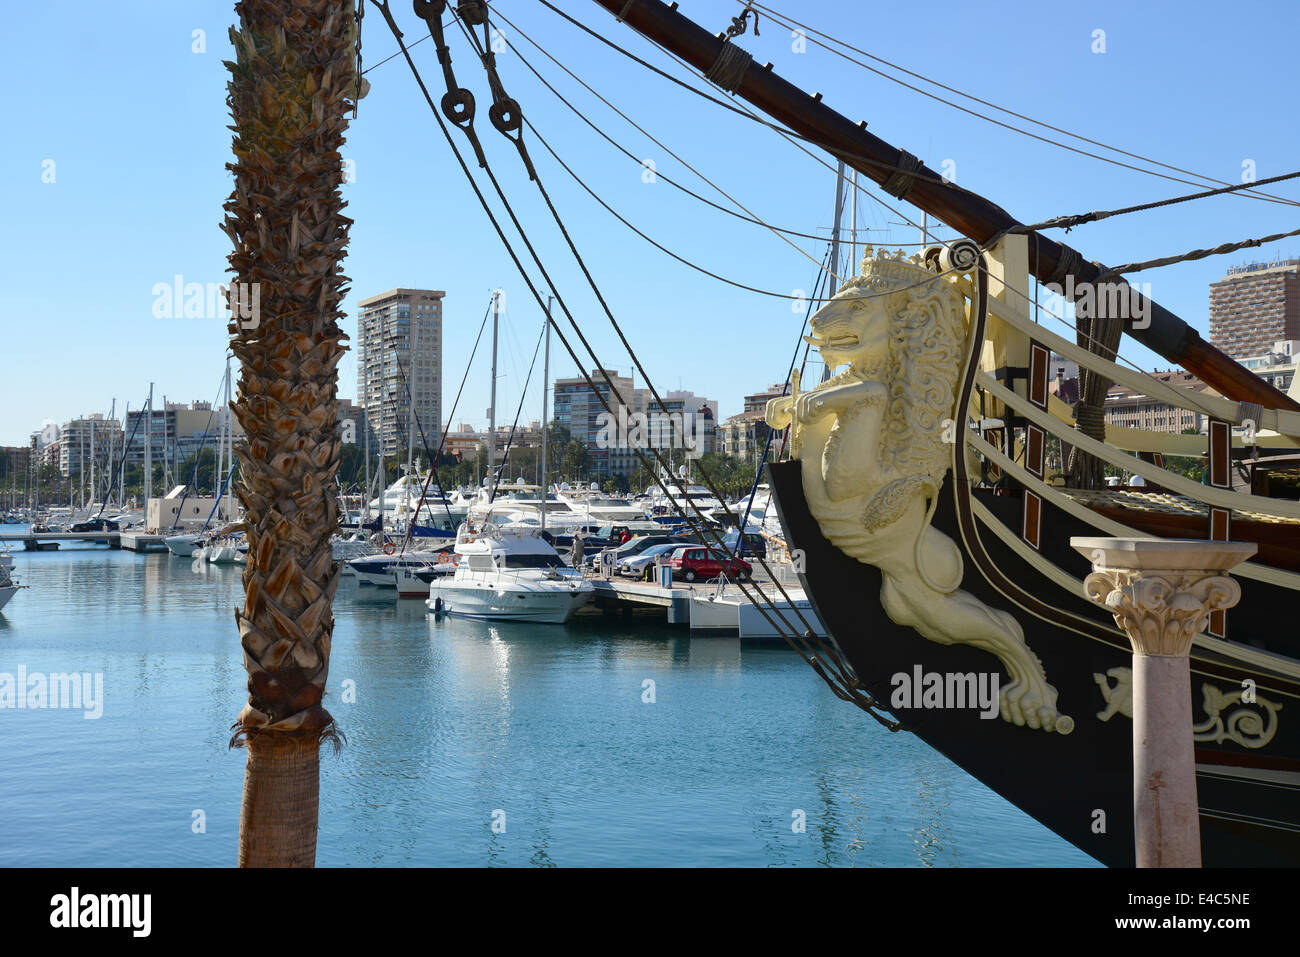 Spanish Galleon 'Santisima Trinidad' in Port of Alicante, Alicante, Costa Blanca, Alicante Province, Kingdom of Spain Stock Photo